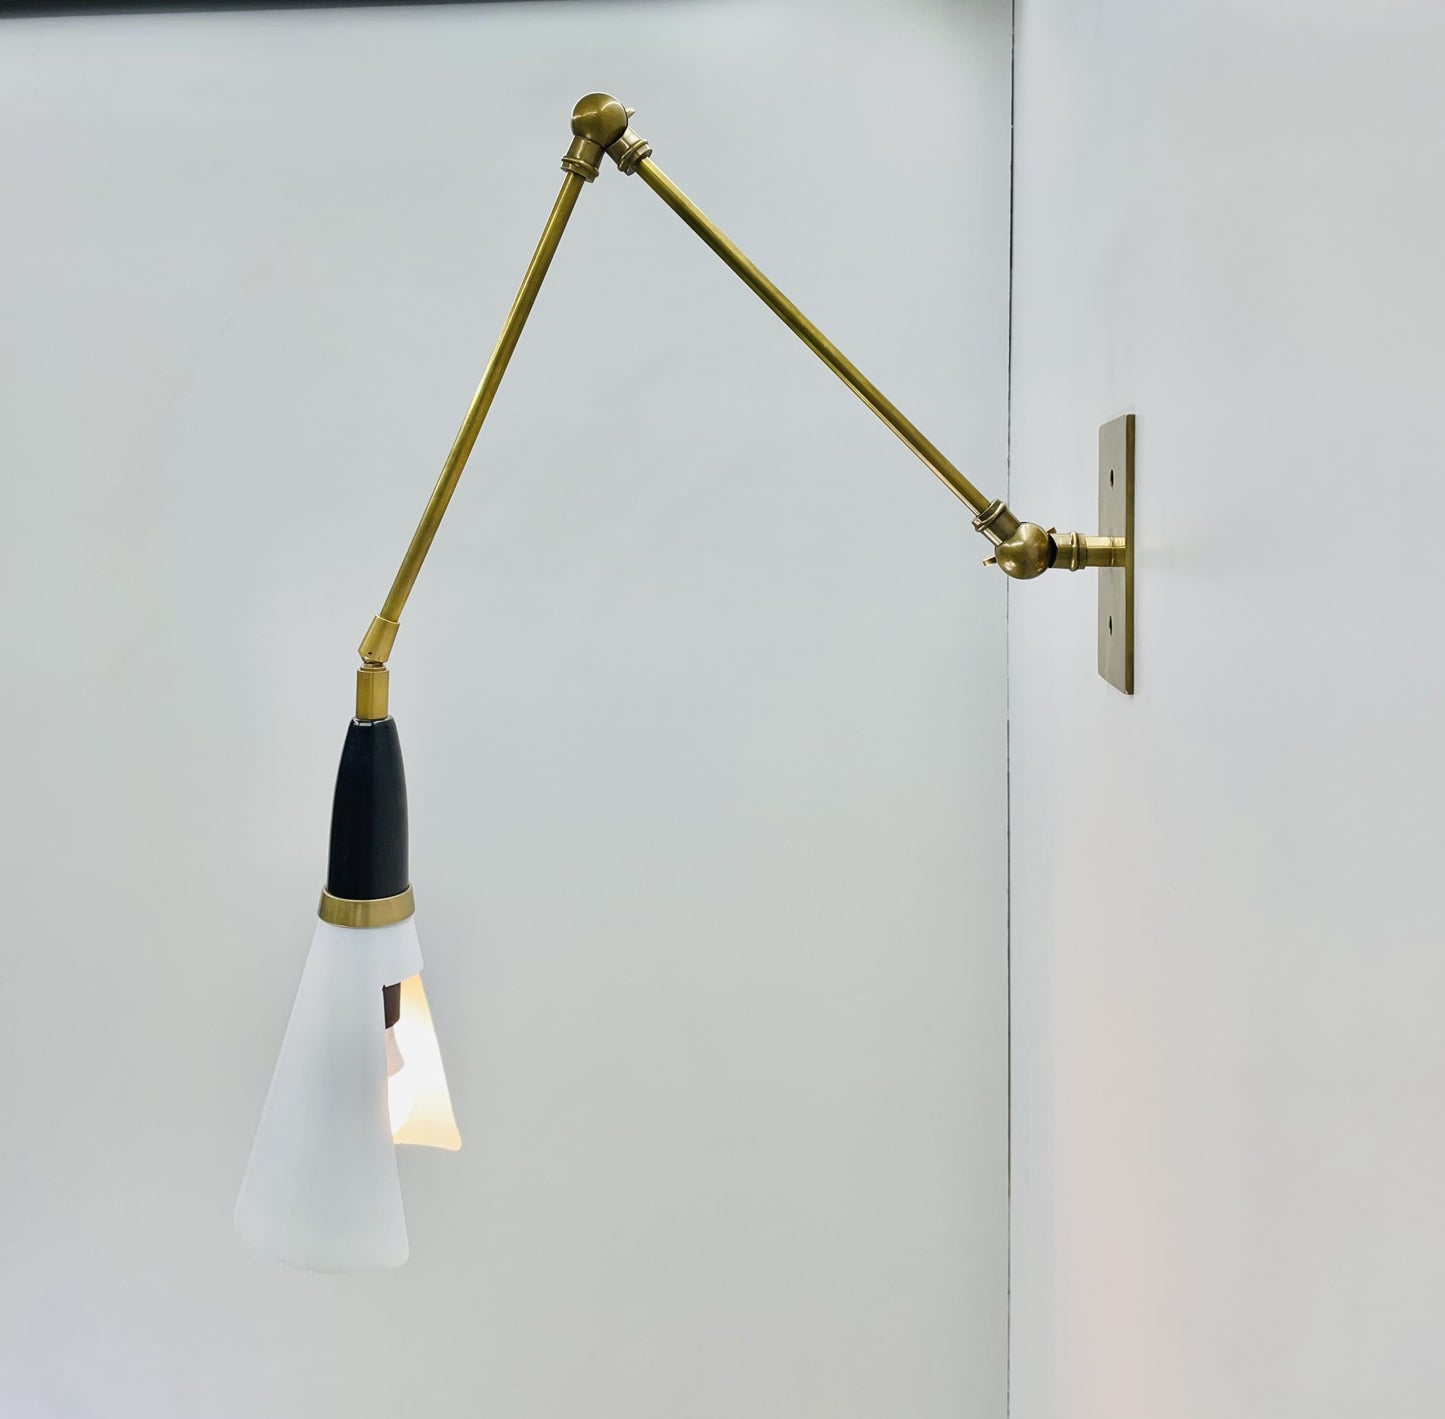 SCICCOSO Brass Wall Lamp GLH Model No. 76 - Global Lights Hub